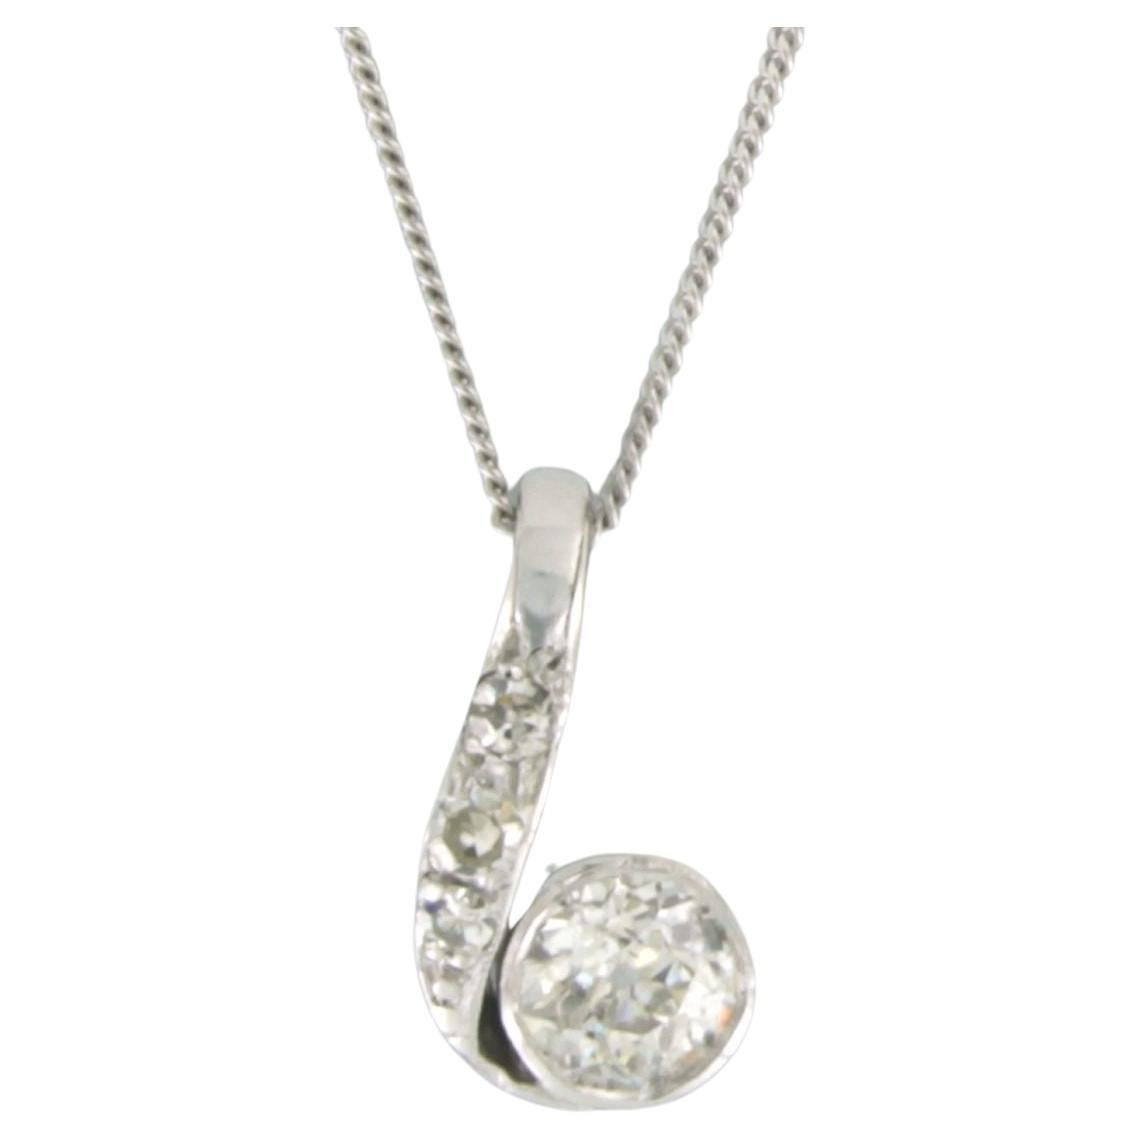 Necklace with Art Nouvea pendant set with diamonds 14k white gold